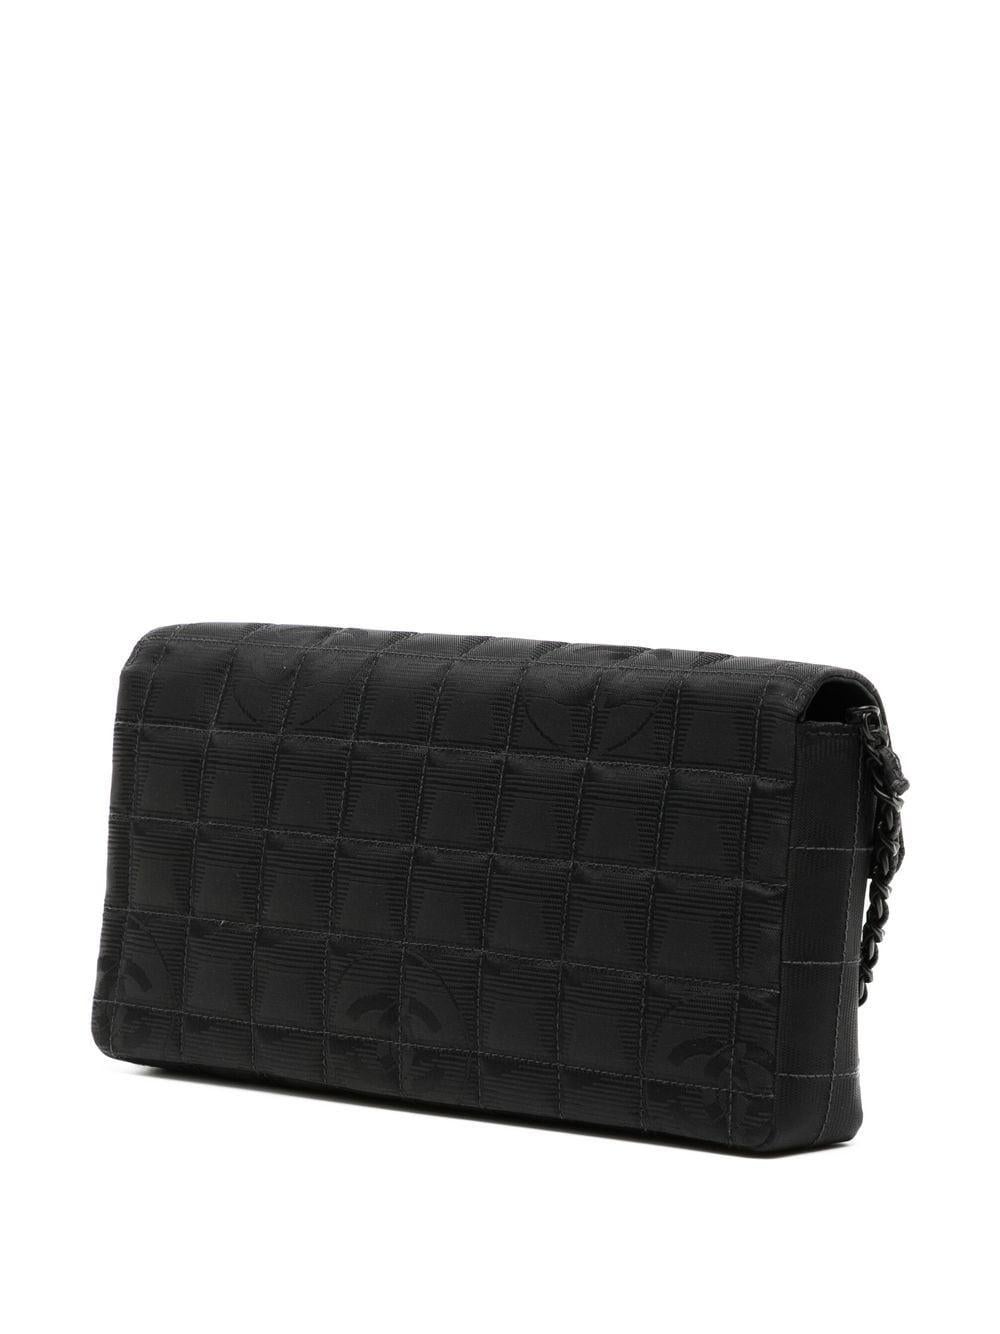 Chanel 2002 Vintage So Black Long Medium Shoulder Convertible Clutch Flap Bag For Sale 9